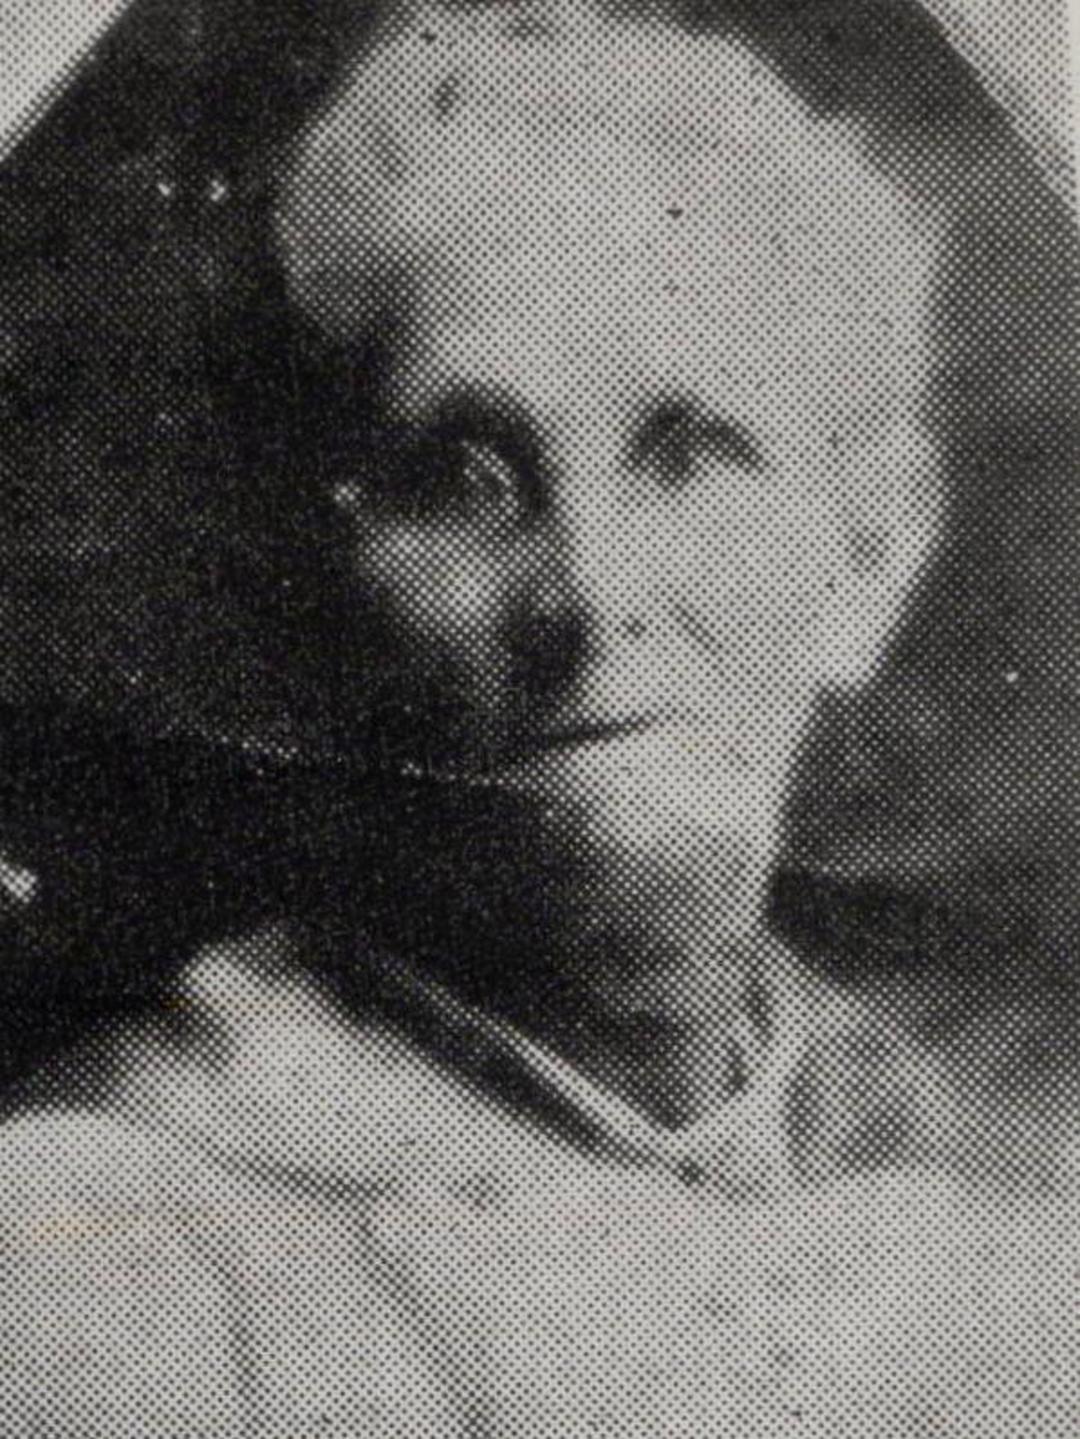 Silvia Amelia Glazier (1859 - 1929) Profile